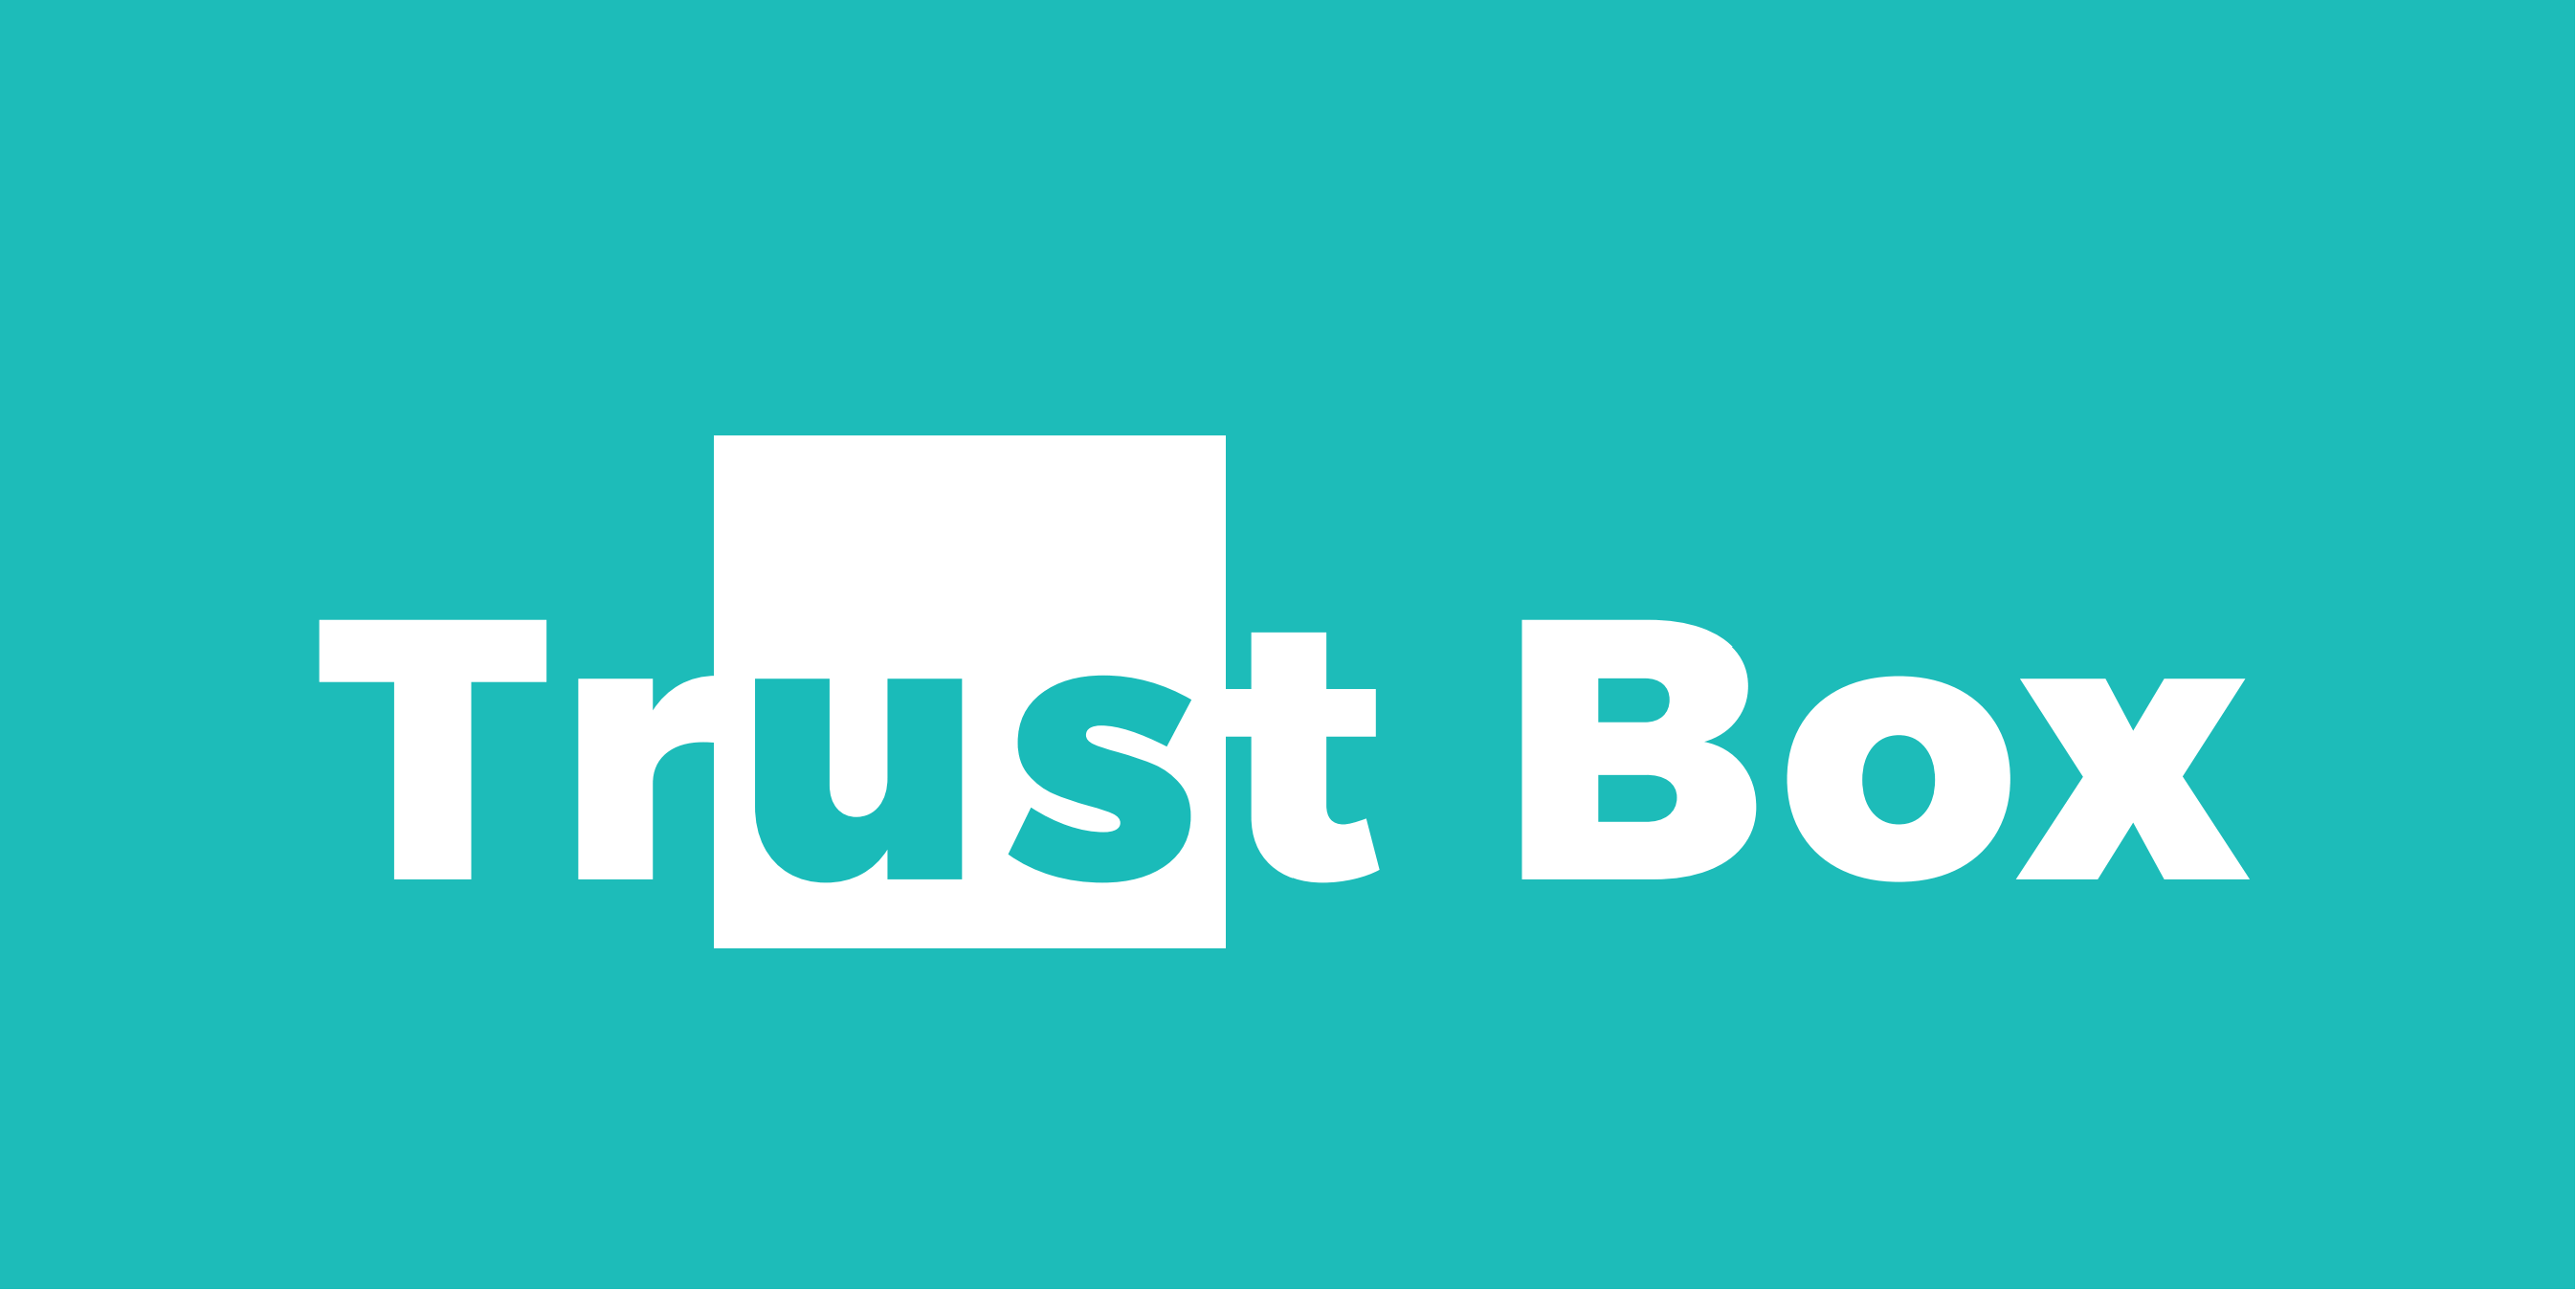 Trust Box Logo